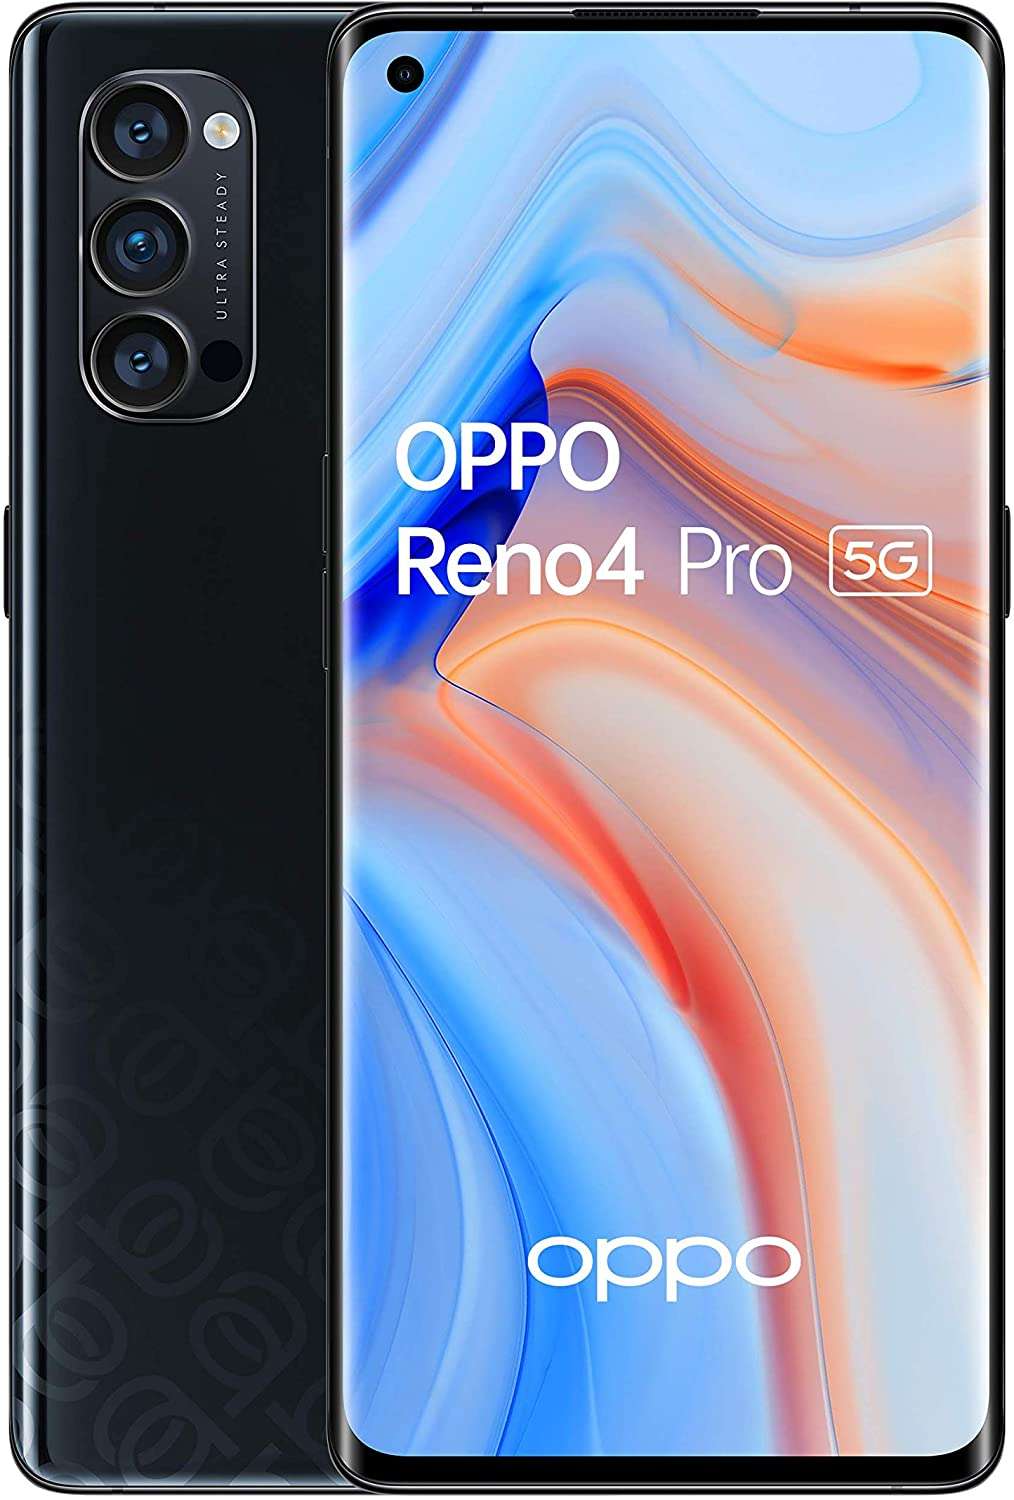 Bon plan Amazon : - 300 ¬ sur le smartphone Oppo Reno 4 Pro